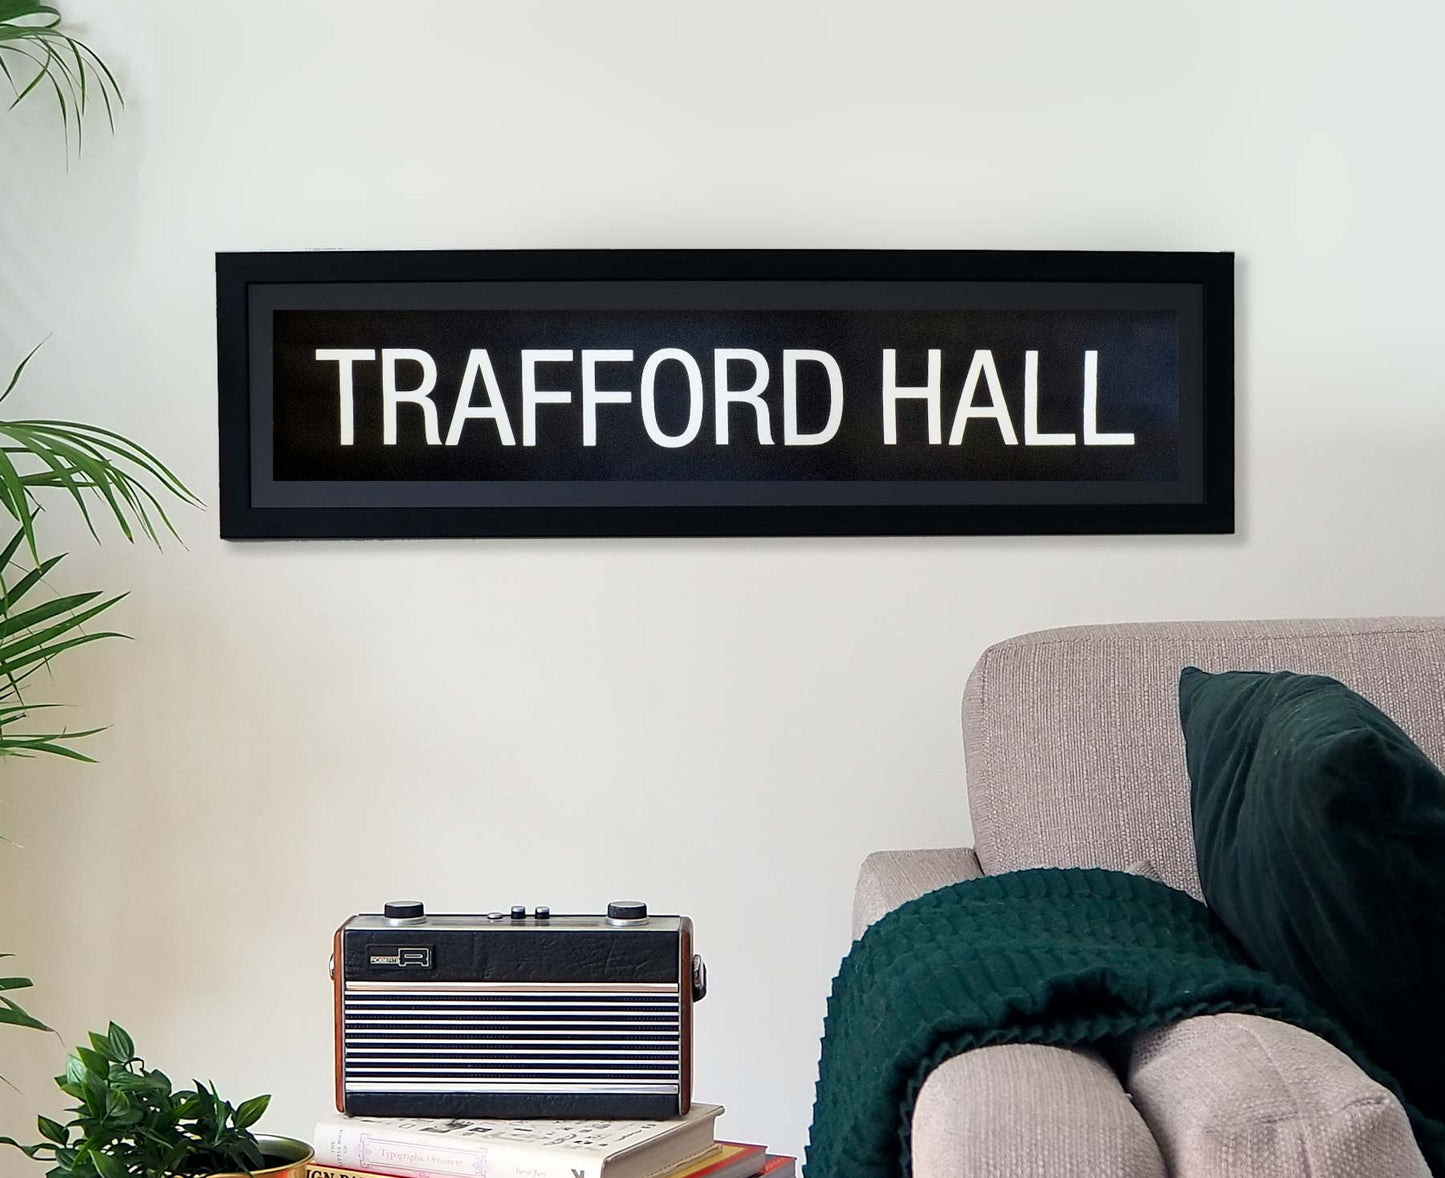 Trafford Hall Framed Bus Blind